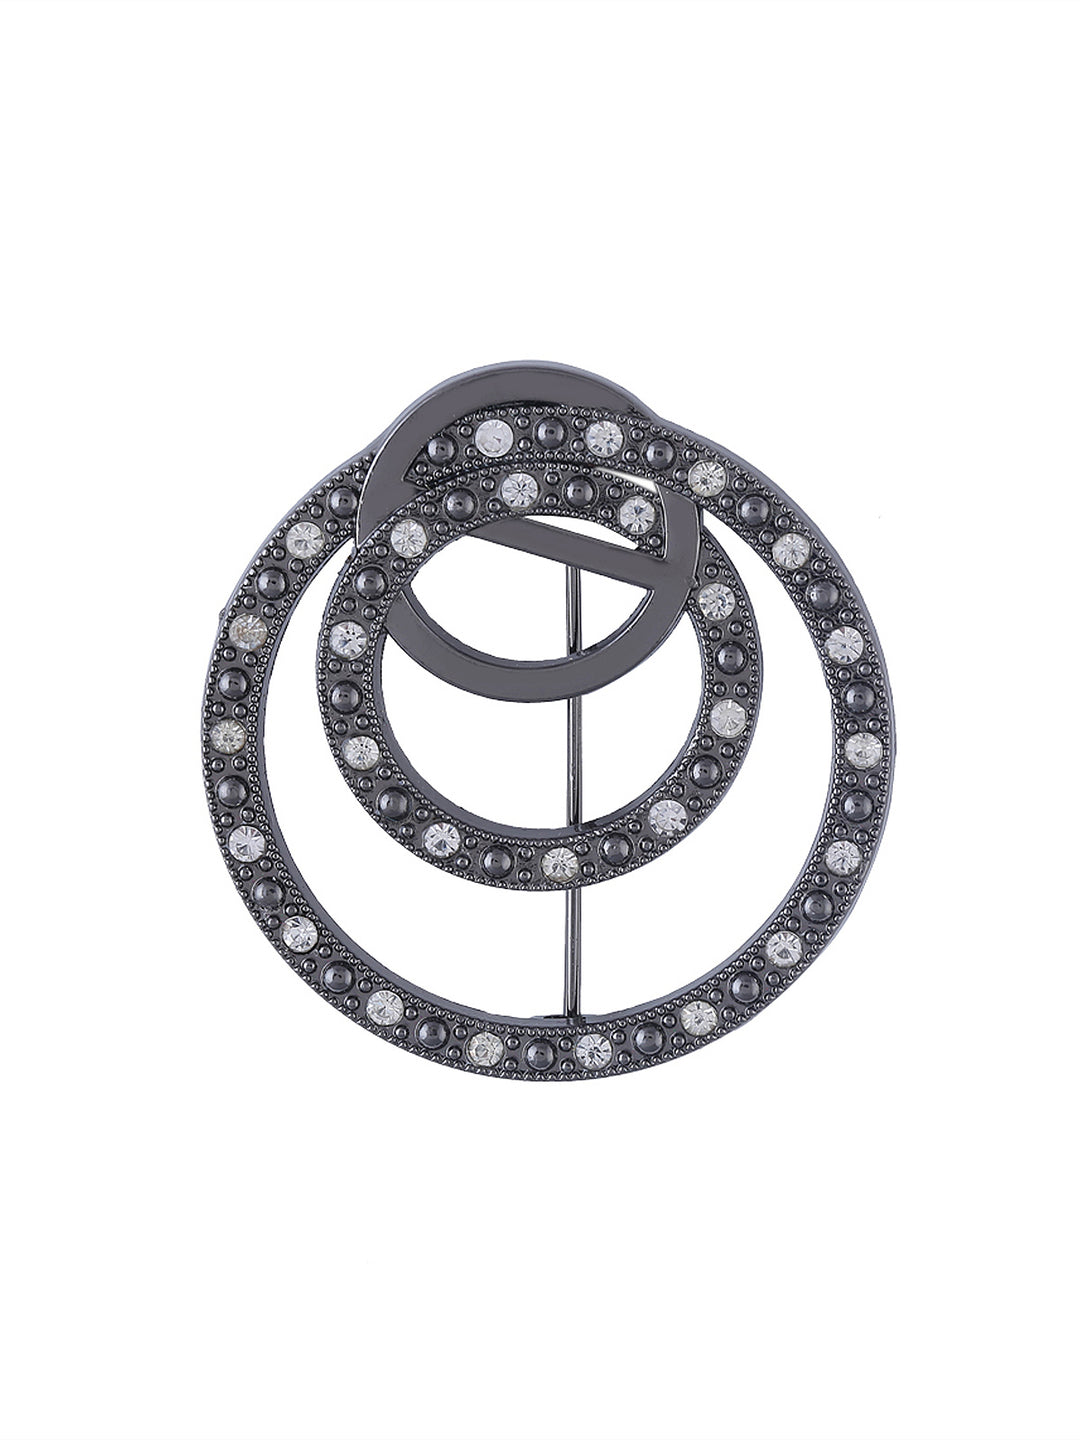 Round Shape Black Nickel (Gunmetal) Color Ring Design Decorative Diamond Brooch Pin